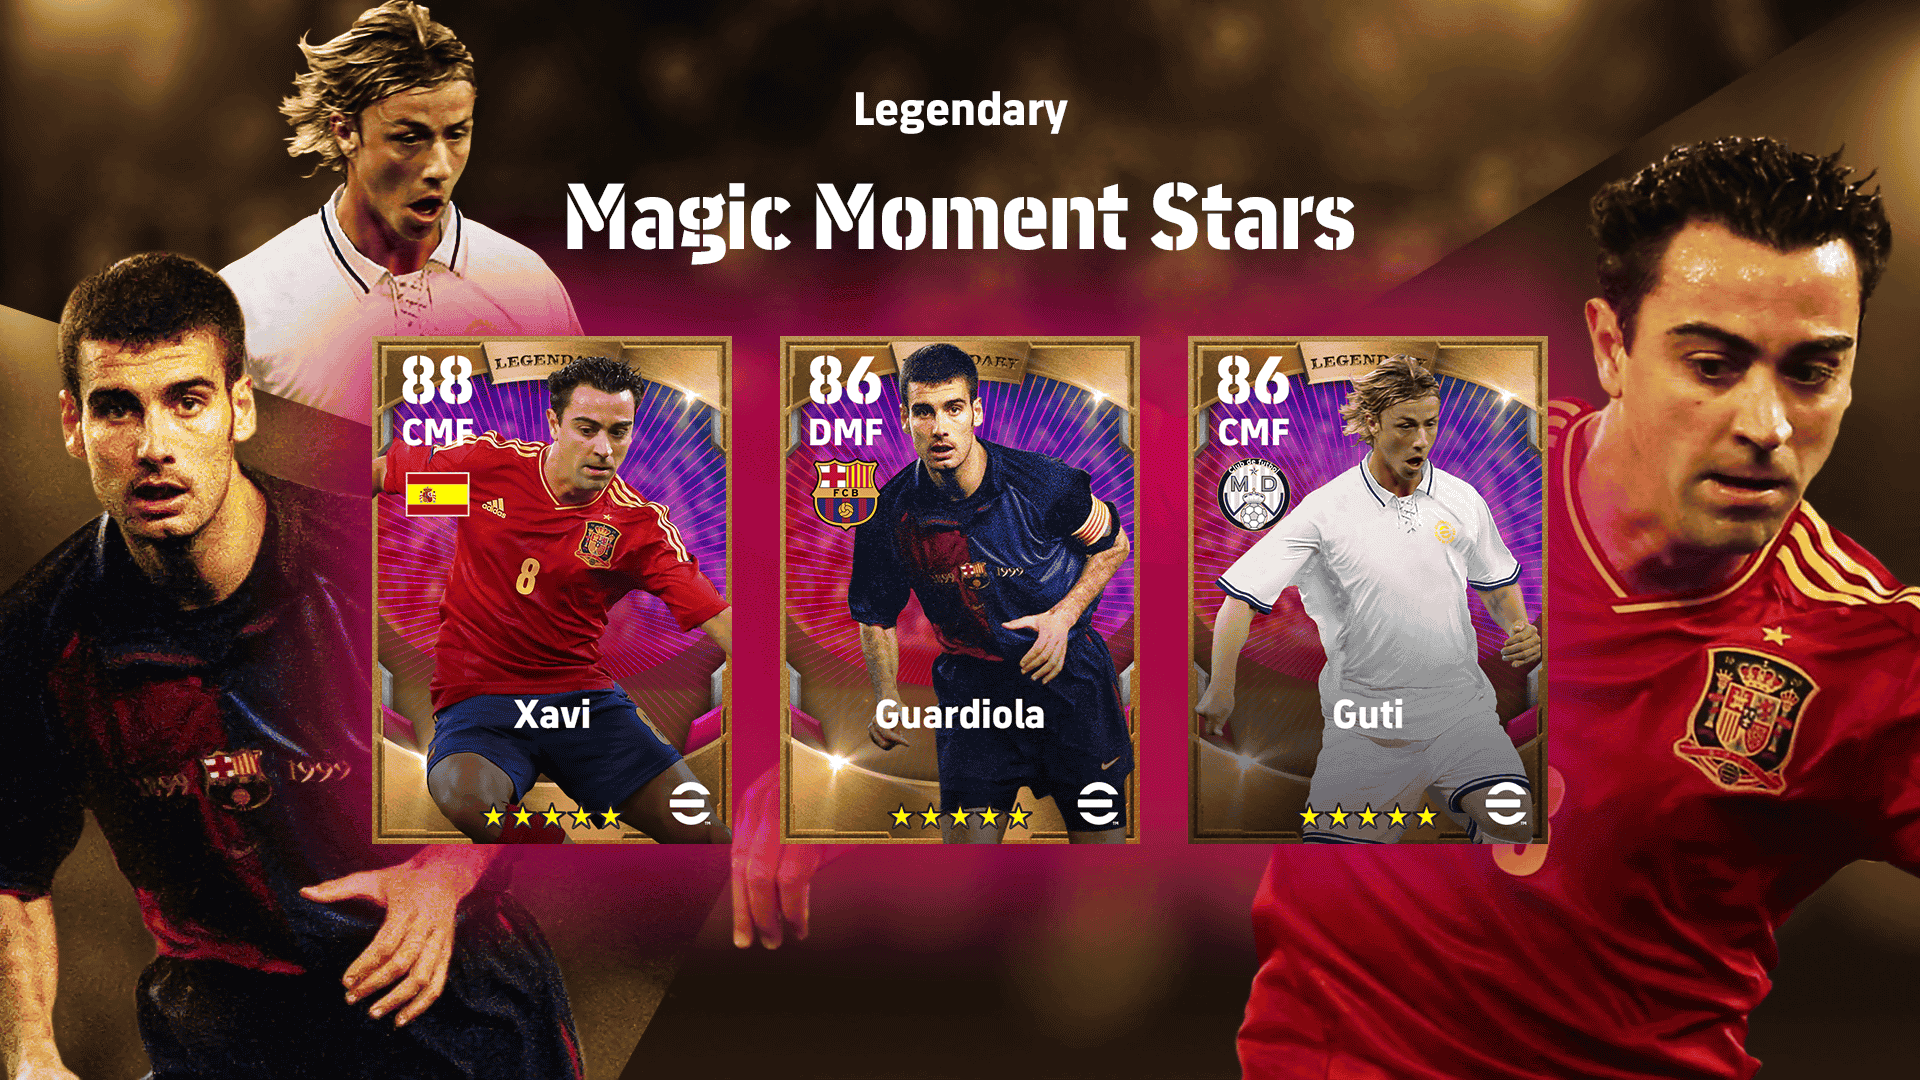 Legendary: Magic Moment Stars